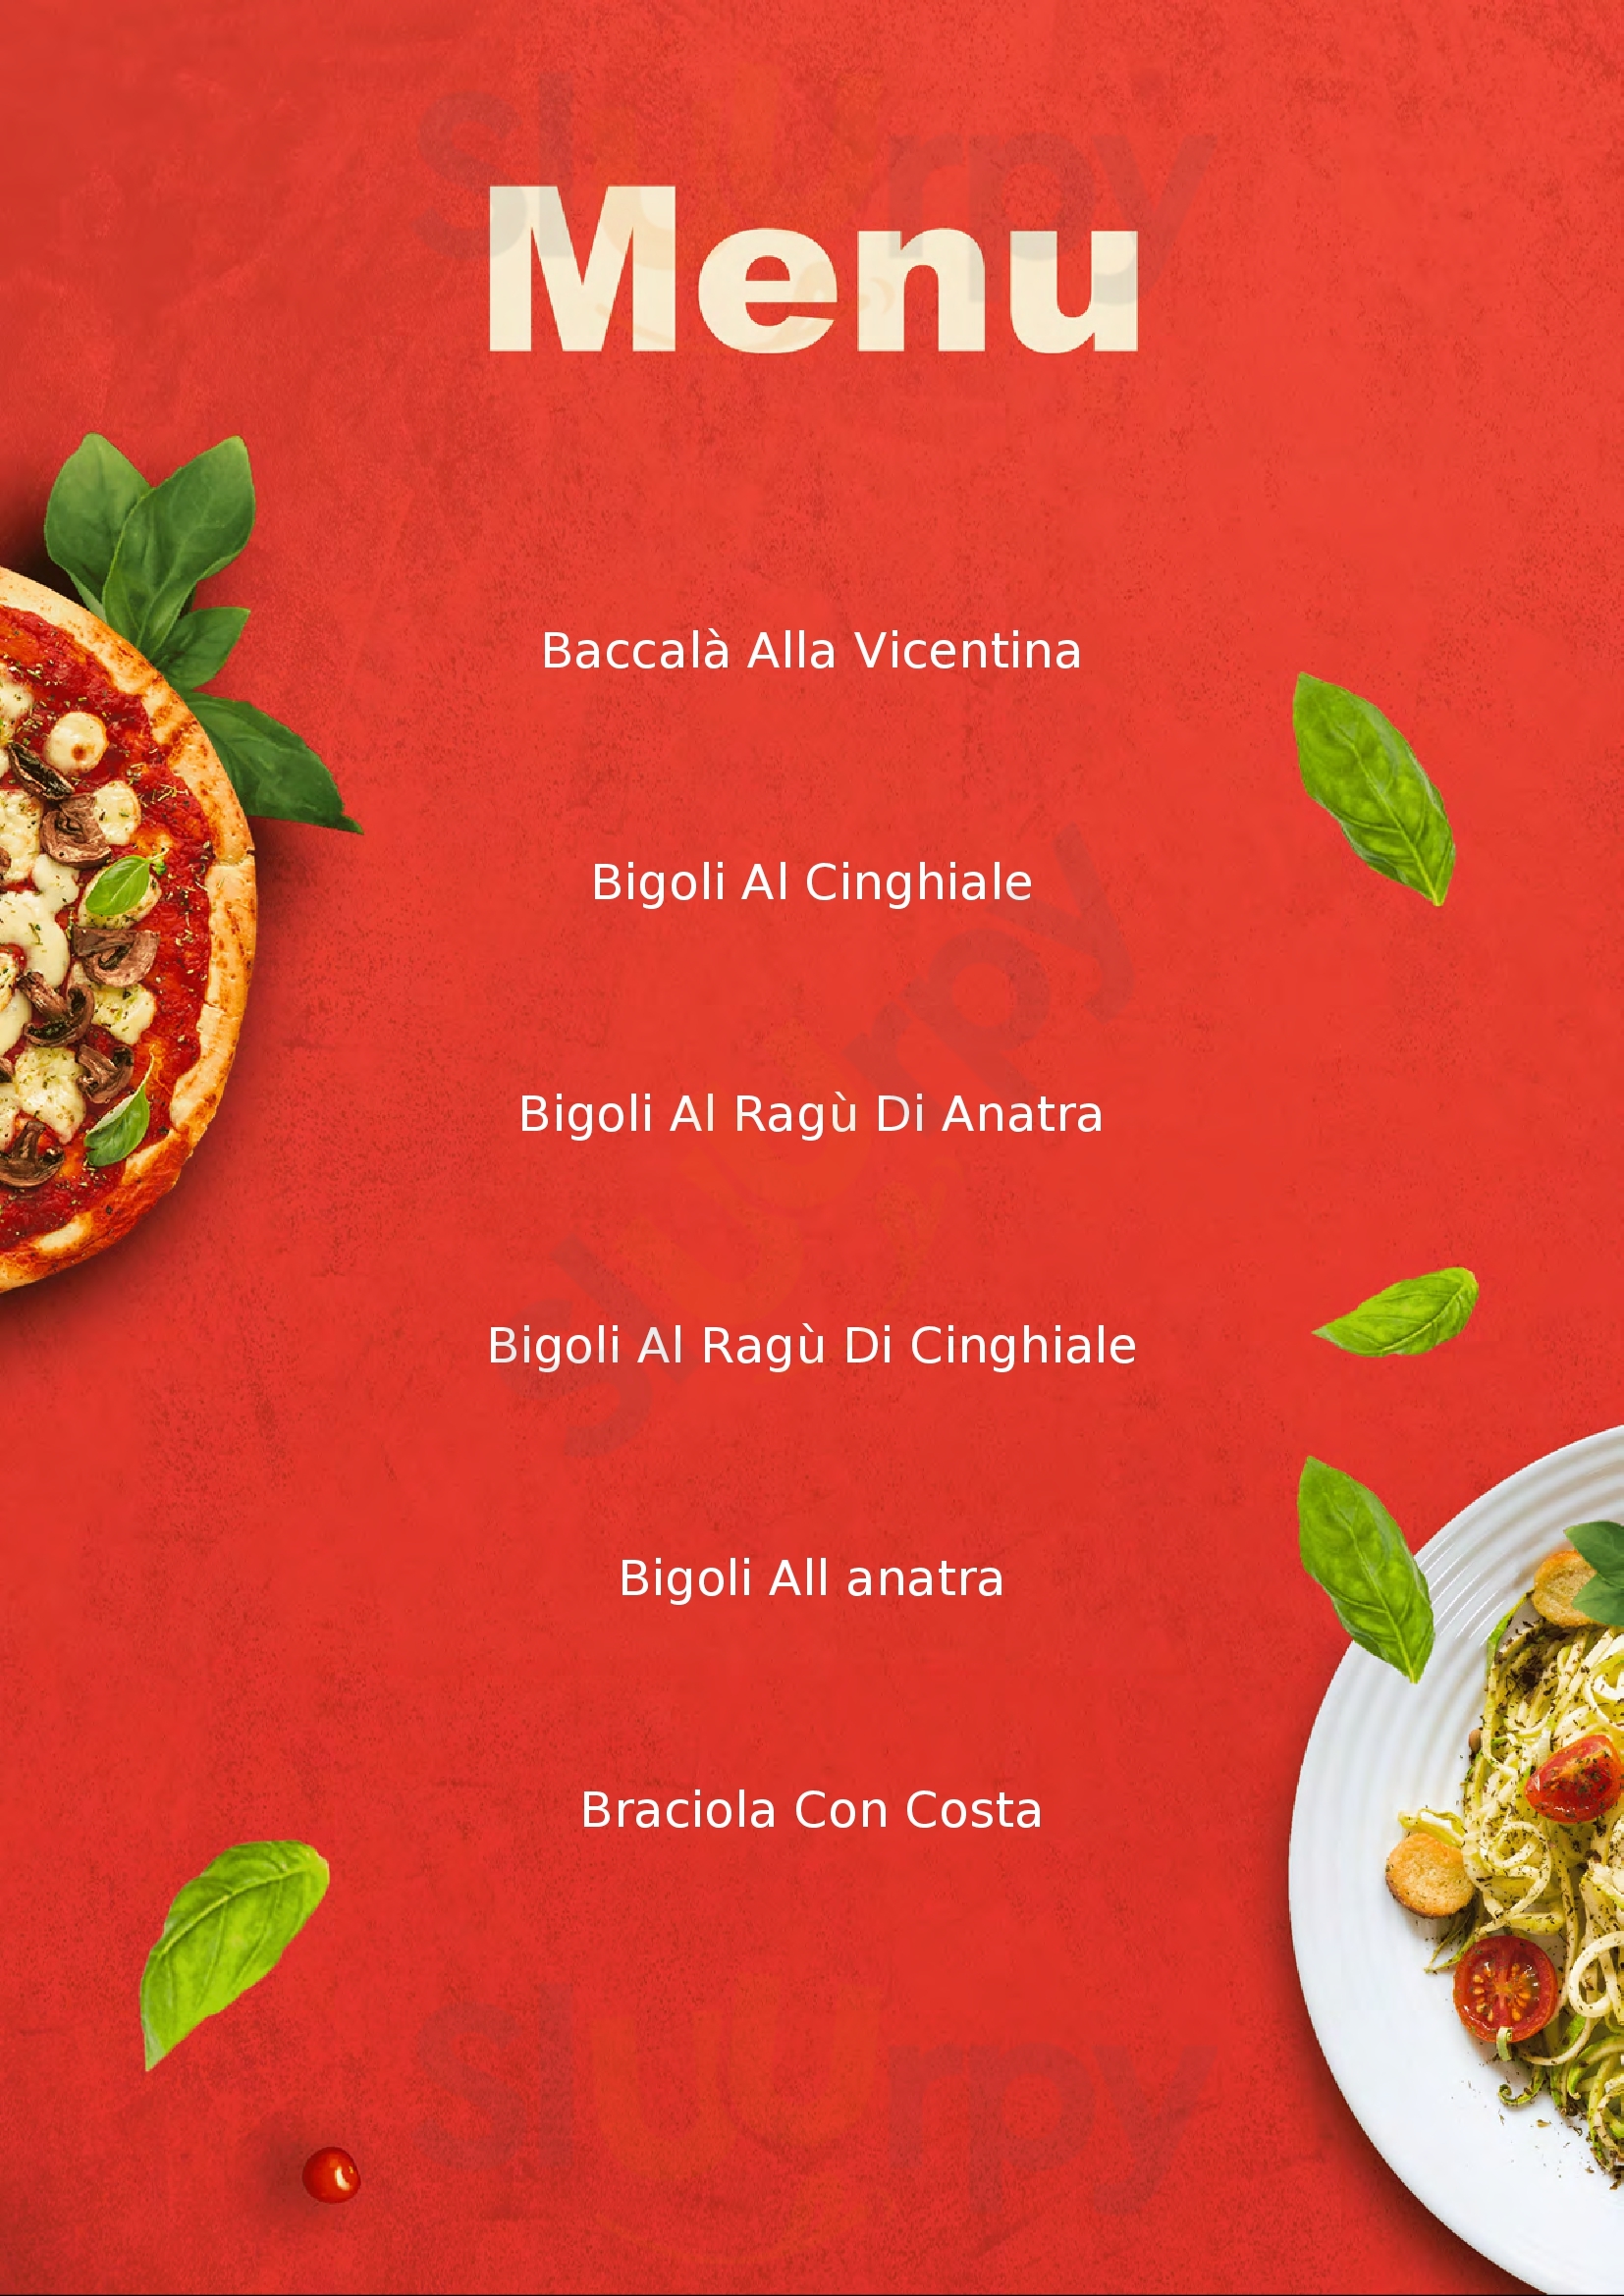 Ca' Romea Ristorante Pizzeria Mira menù 1 pagina